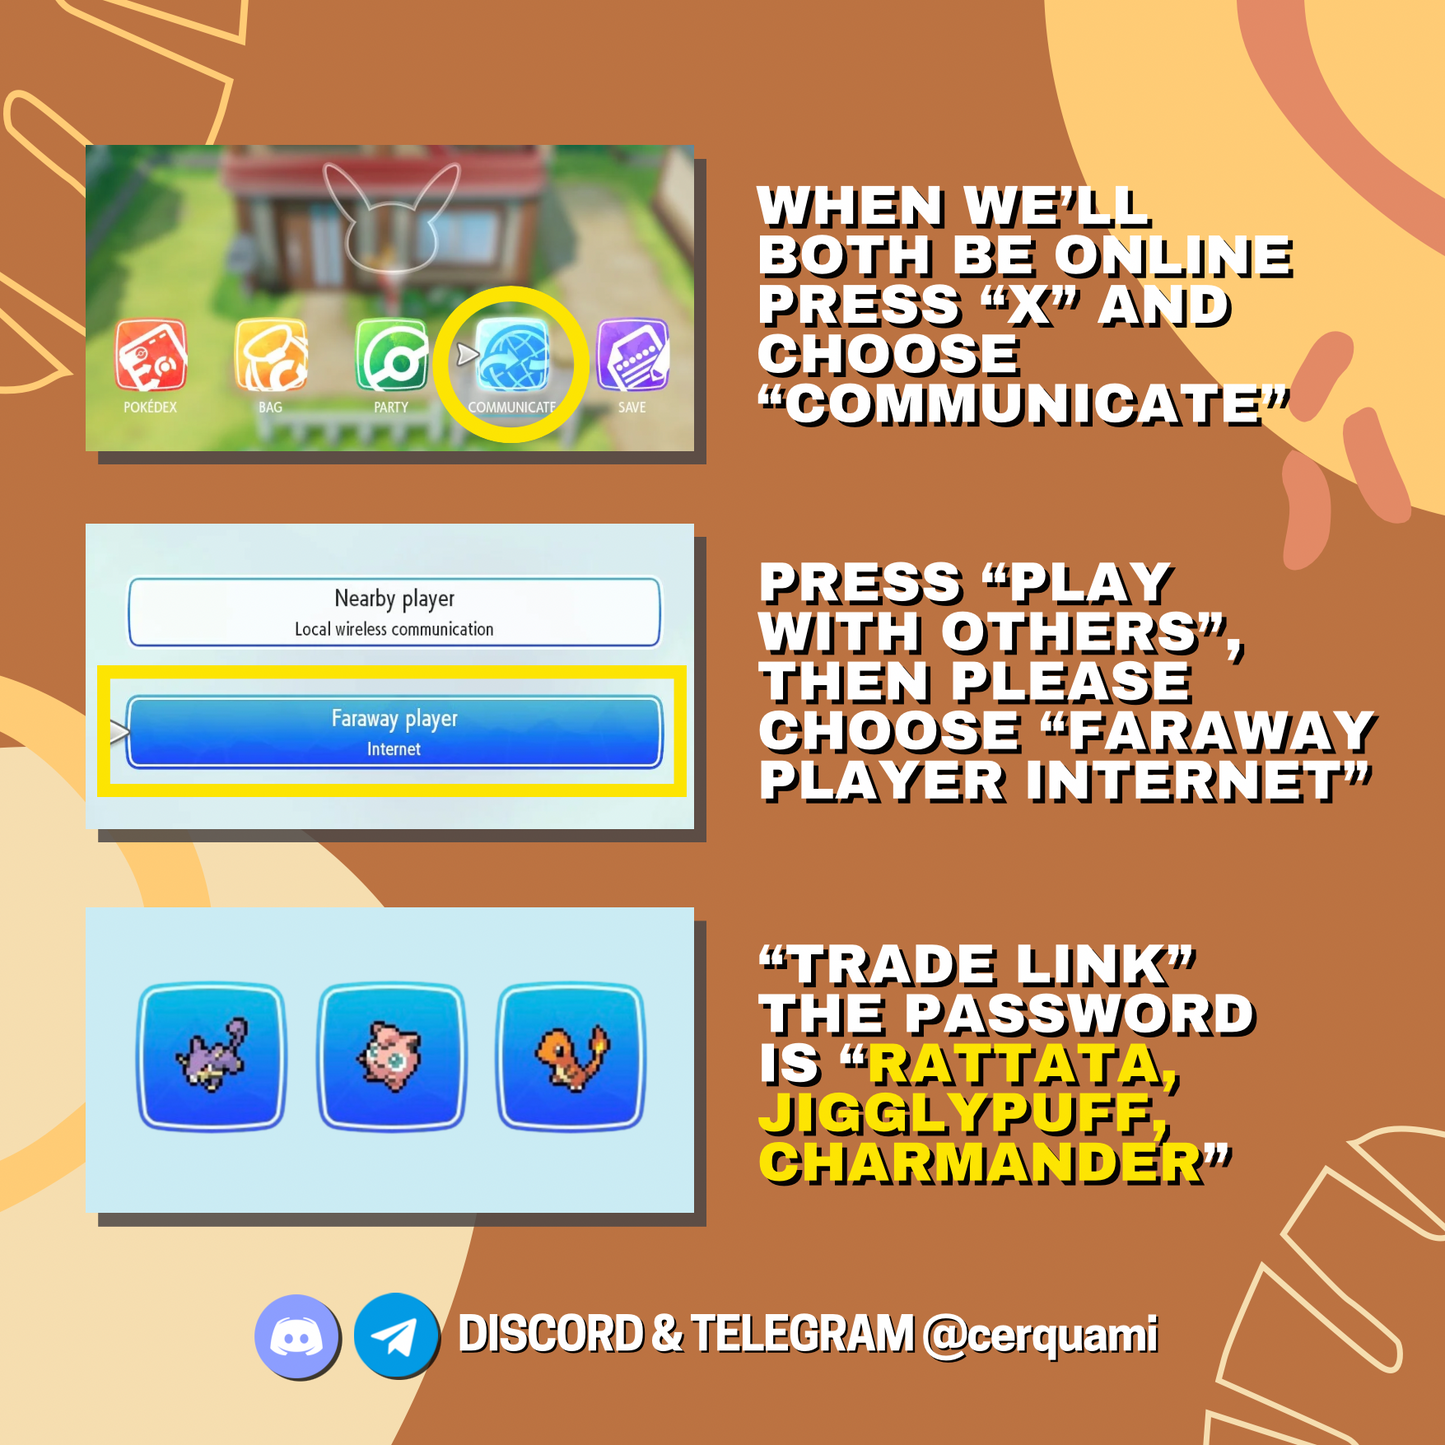 Golduck Shiny ✨ or Non Shiny Pokémon Let's Go Pikachu Eevee Level 100 Competitive Battle Ready 6 IV 100% Legit Legal Customizable Custom OT by Shiny Living Dex | Shiny Living Dex